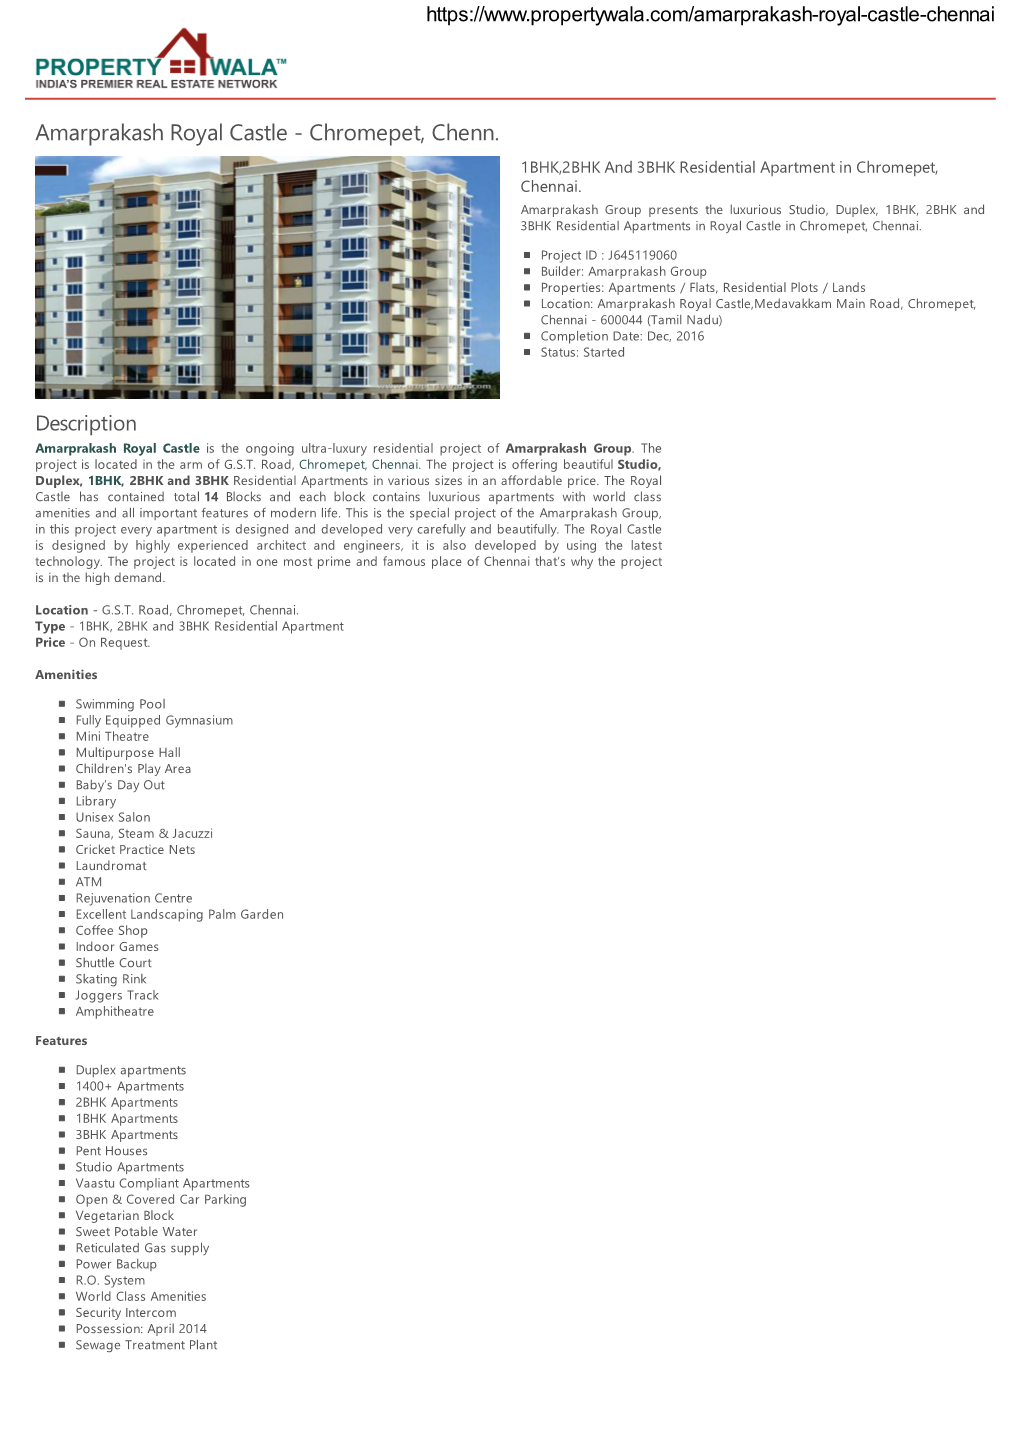 Amarprakash Royal Castle - Chromepet, Chenn… 1BHK,2BHK and 3BHK Residential Apartment in Chromepet, Chennai